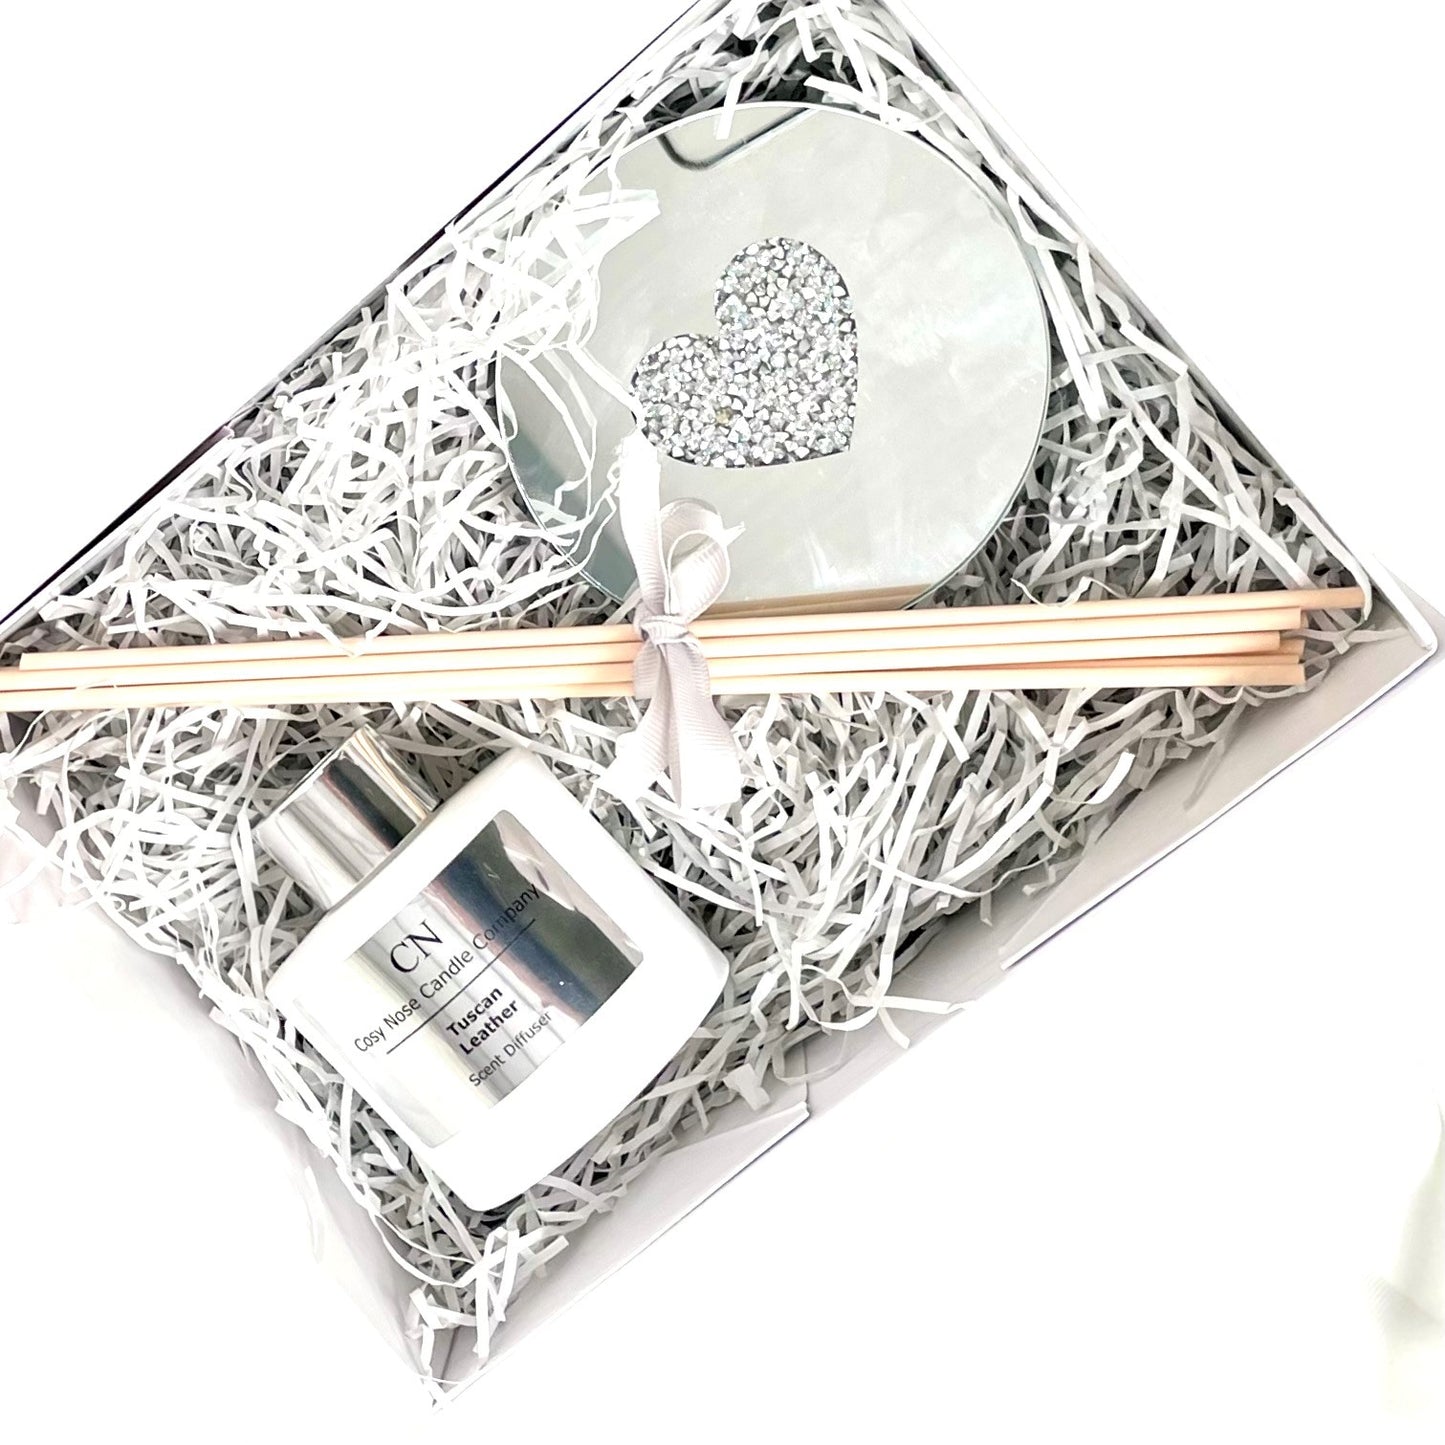 White Silver Diffuser Gift Set